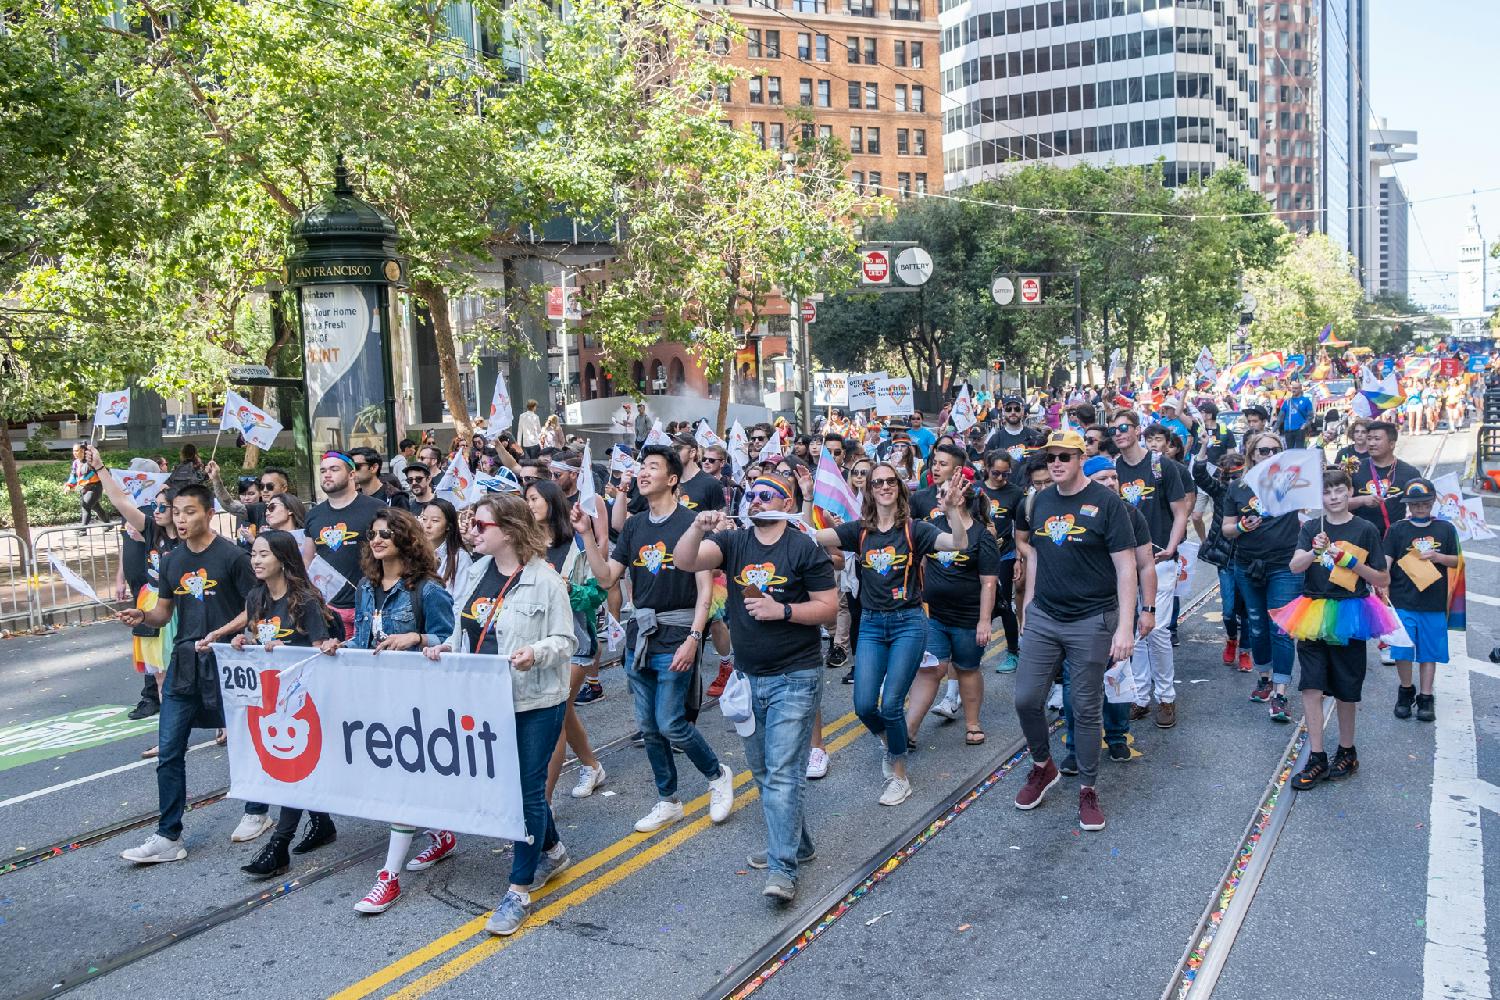  Reddit employees celebrating San Francisco’s Pride Parade.  